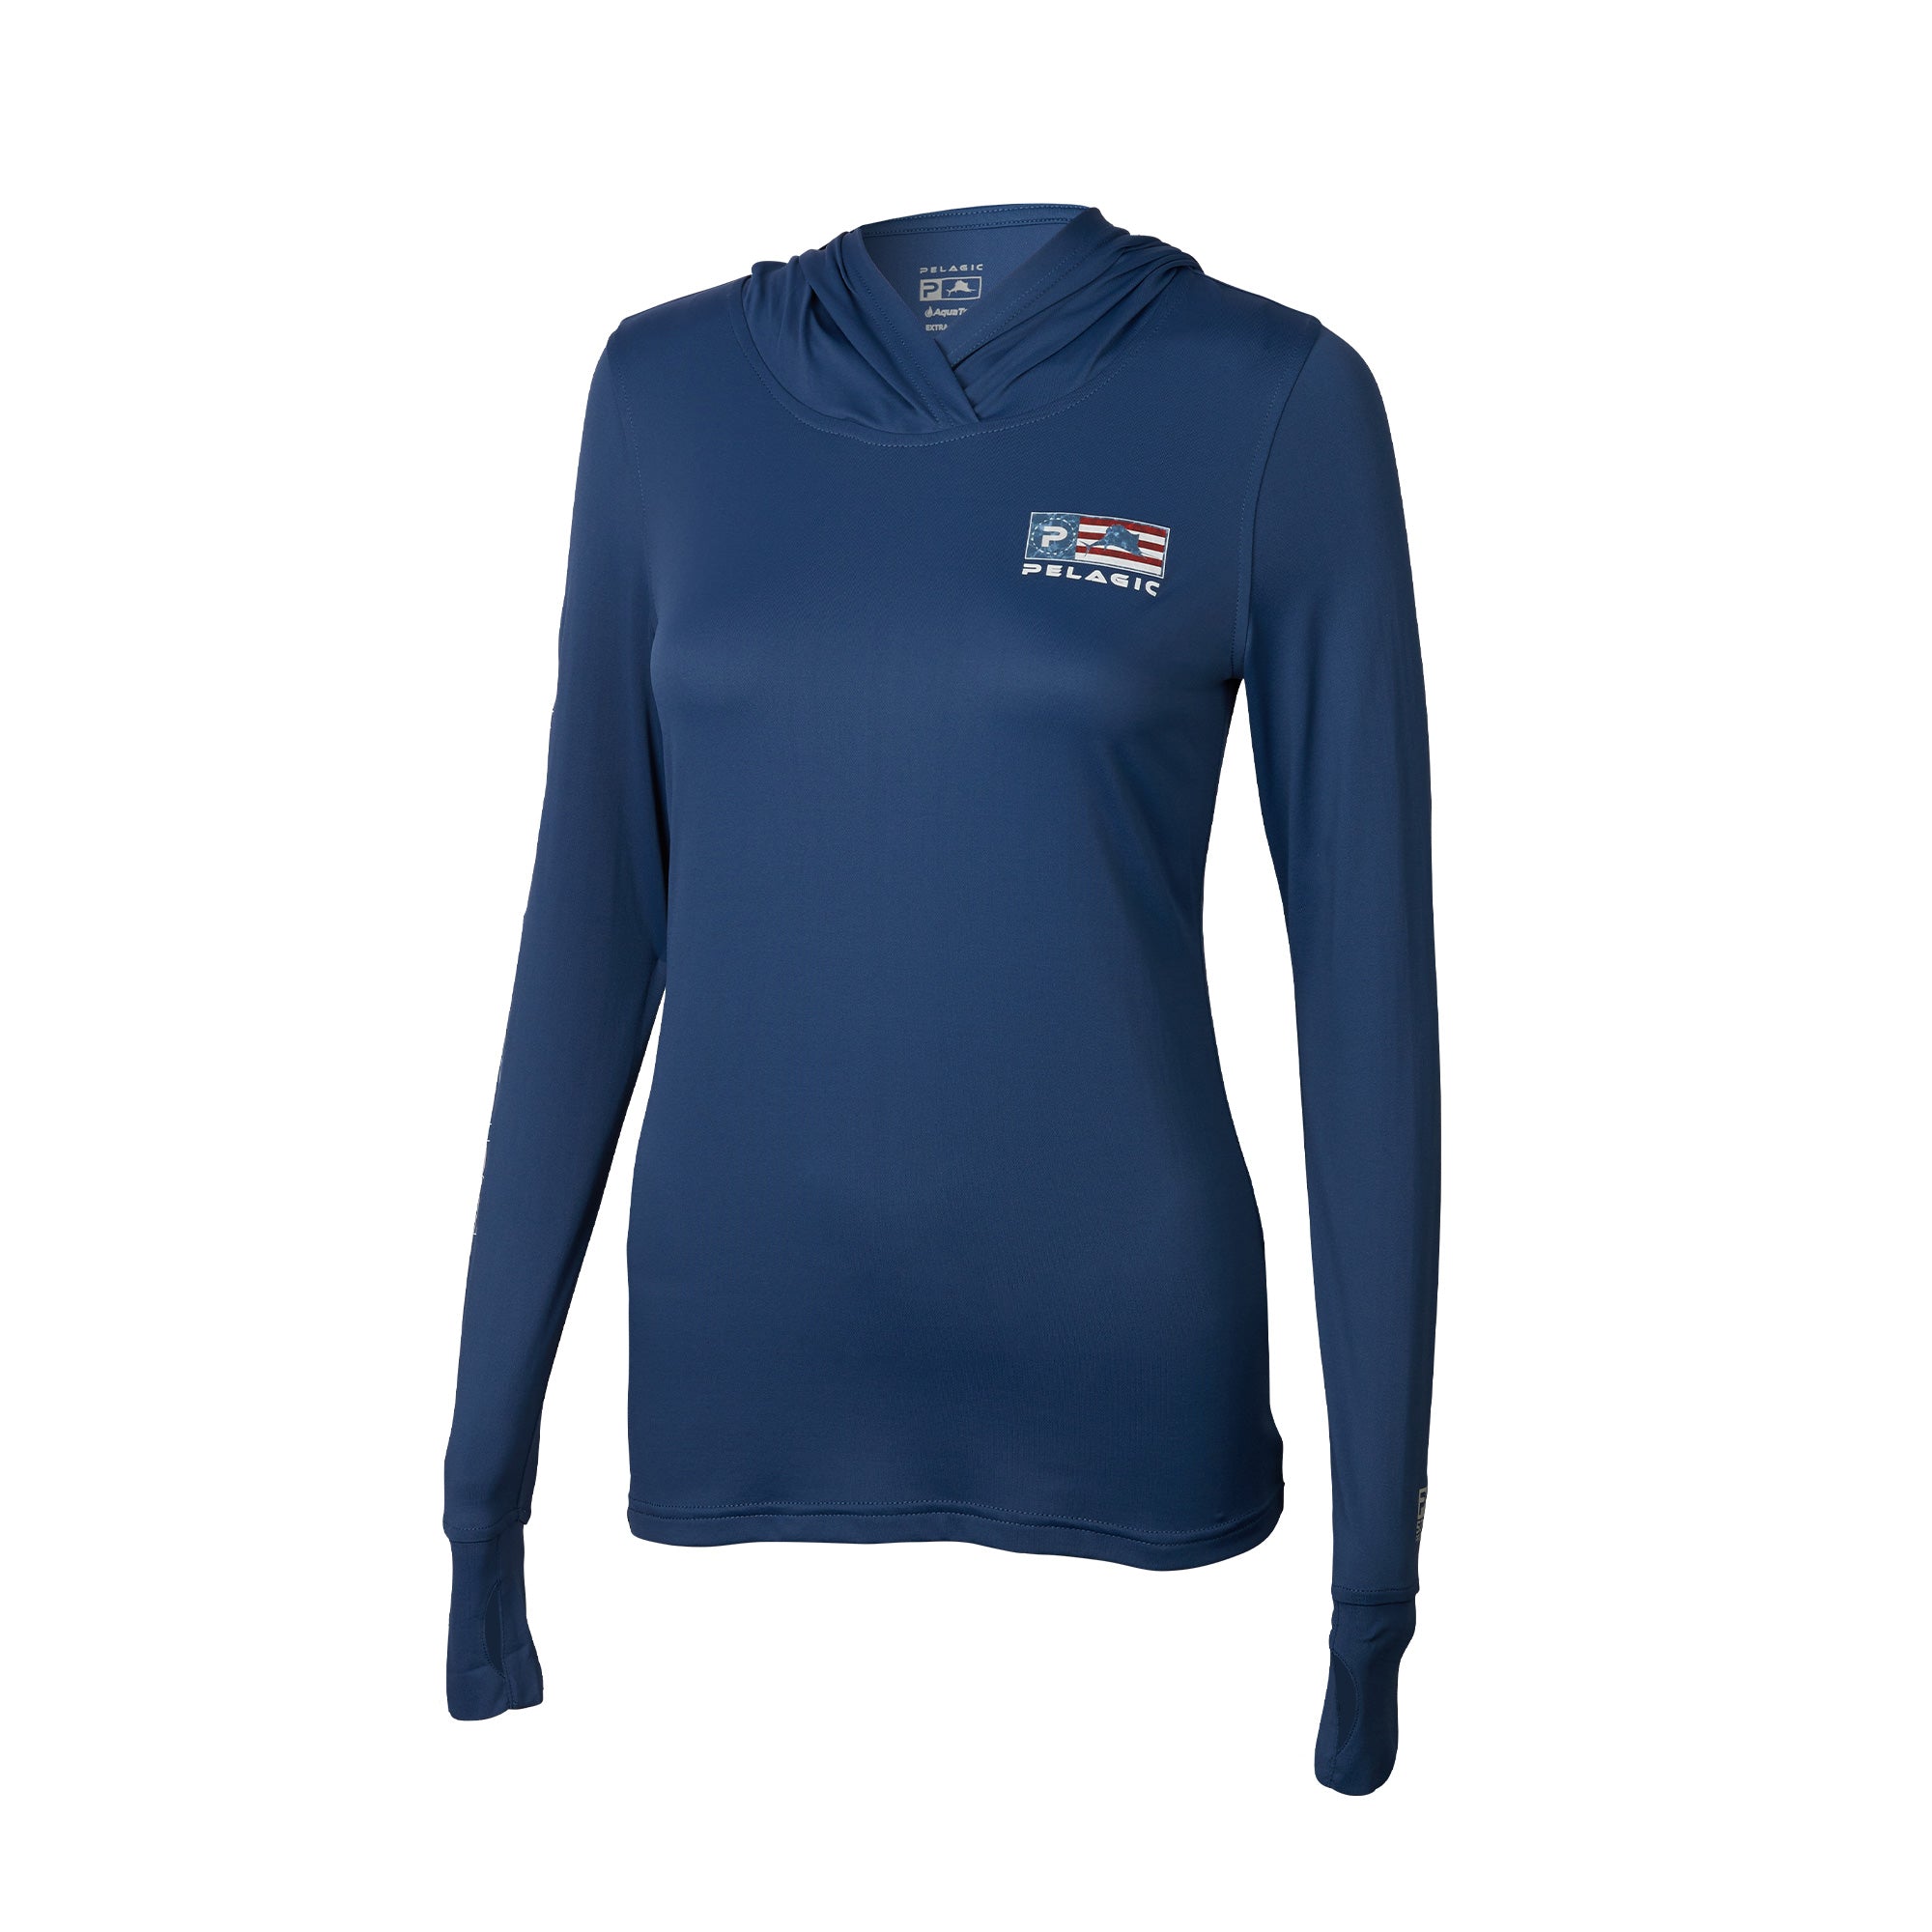 Pelagic Sun Shirt LS - Aquatek Icon Americamo - Smokey Blue Medium